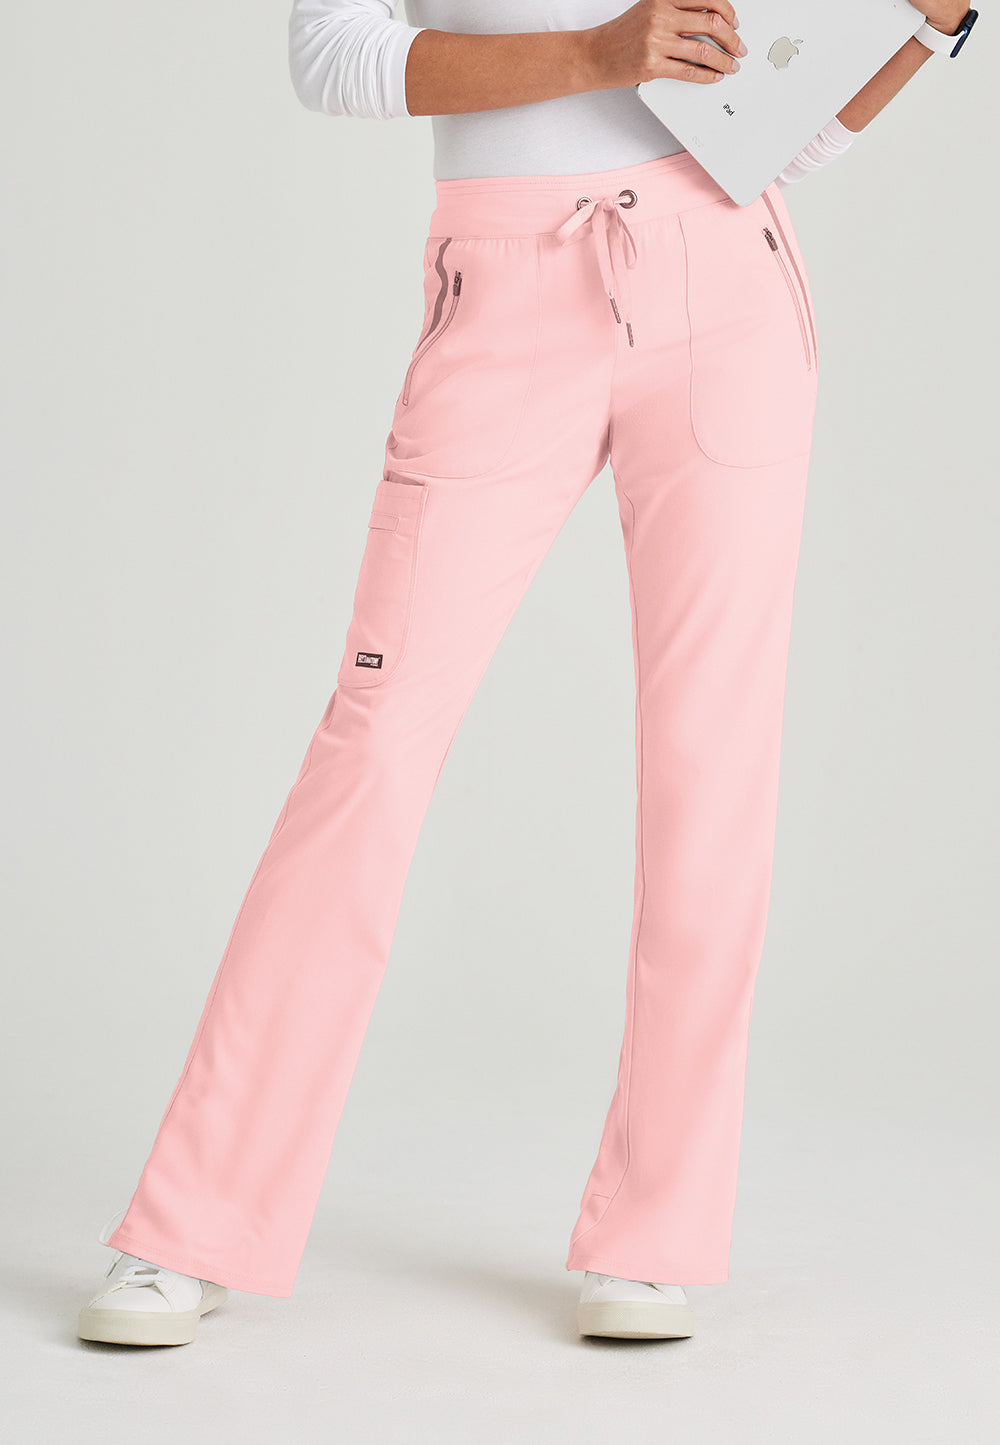 Pantalon de Scrub 6 poches Grey's Anatomy Impact Elevate Pant #7228 Rosy Coral